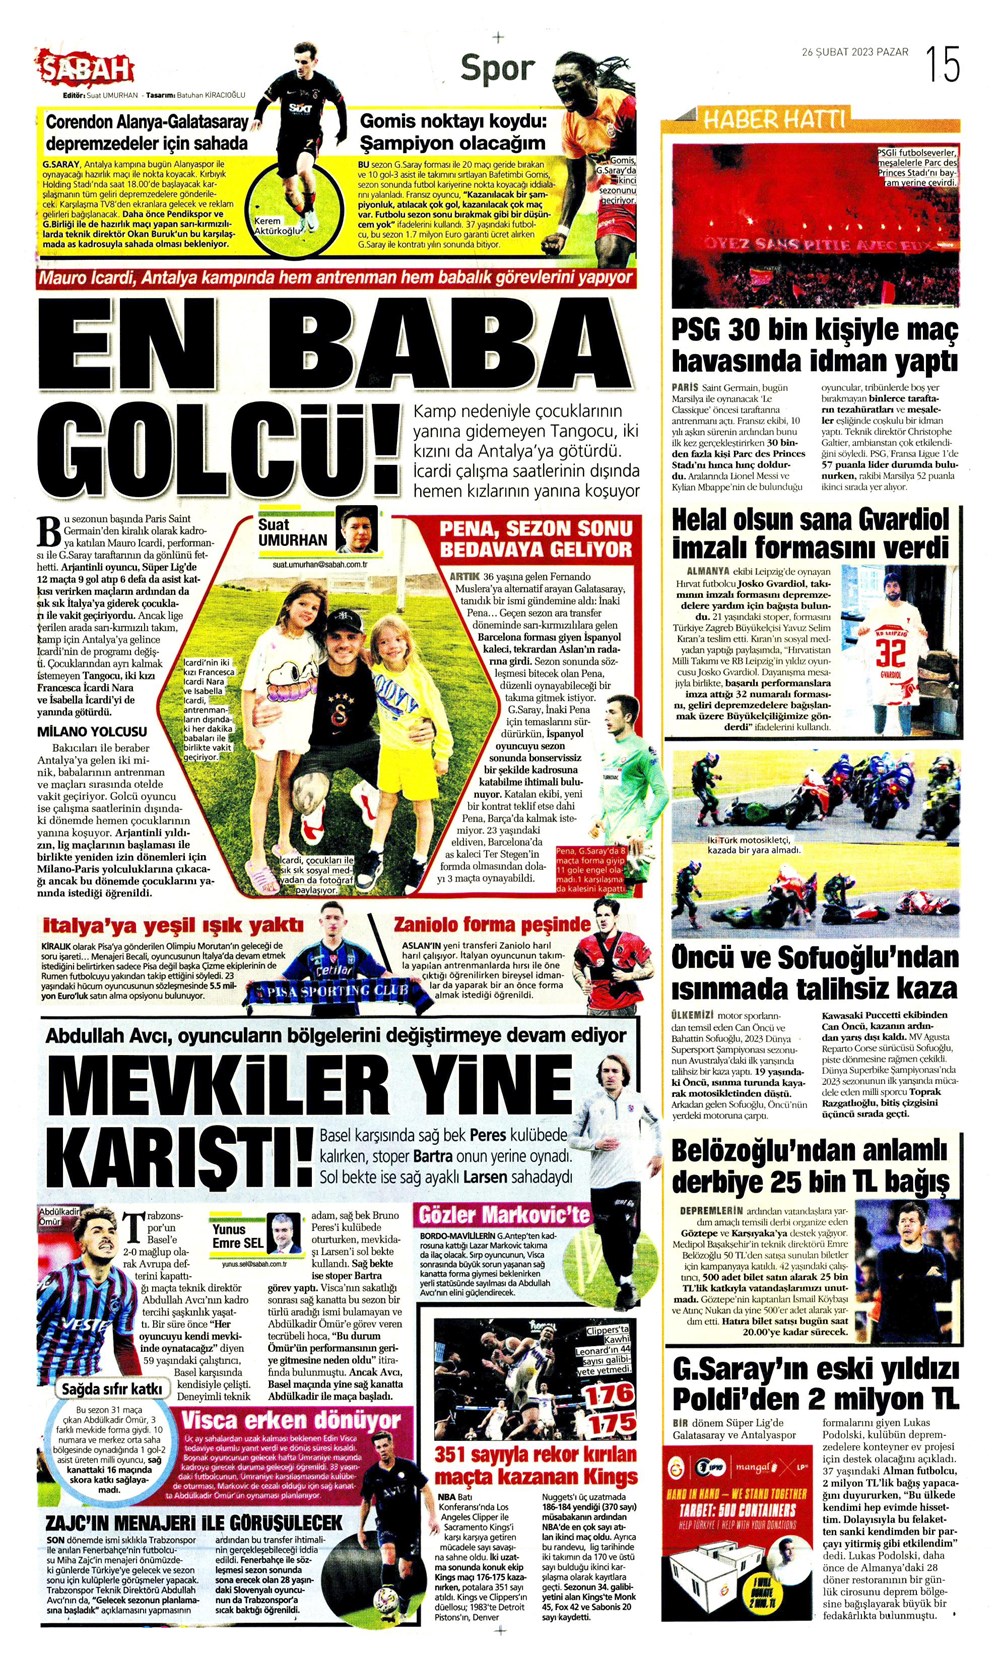 "Valenci'ağa' böyle istedi" - Sporun manşetleri  - 25. Foto